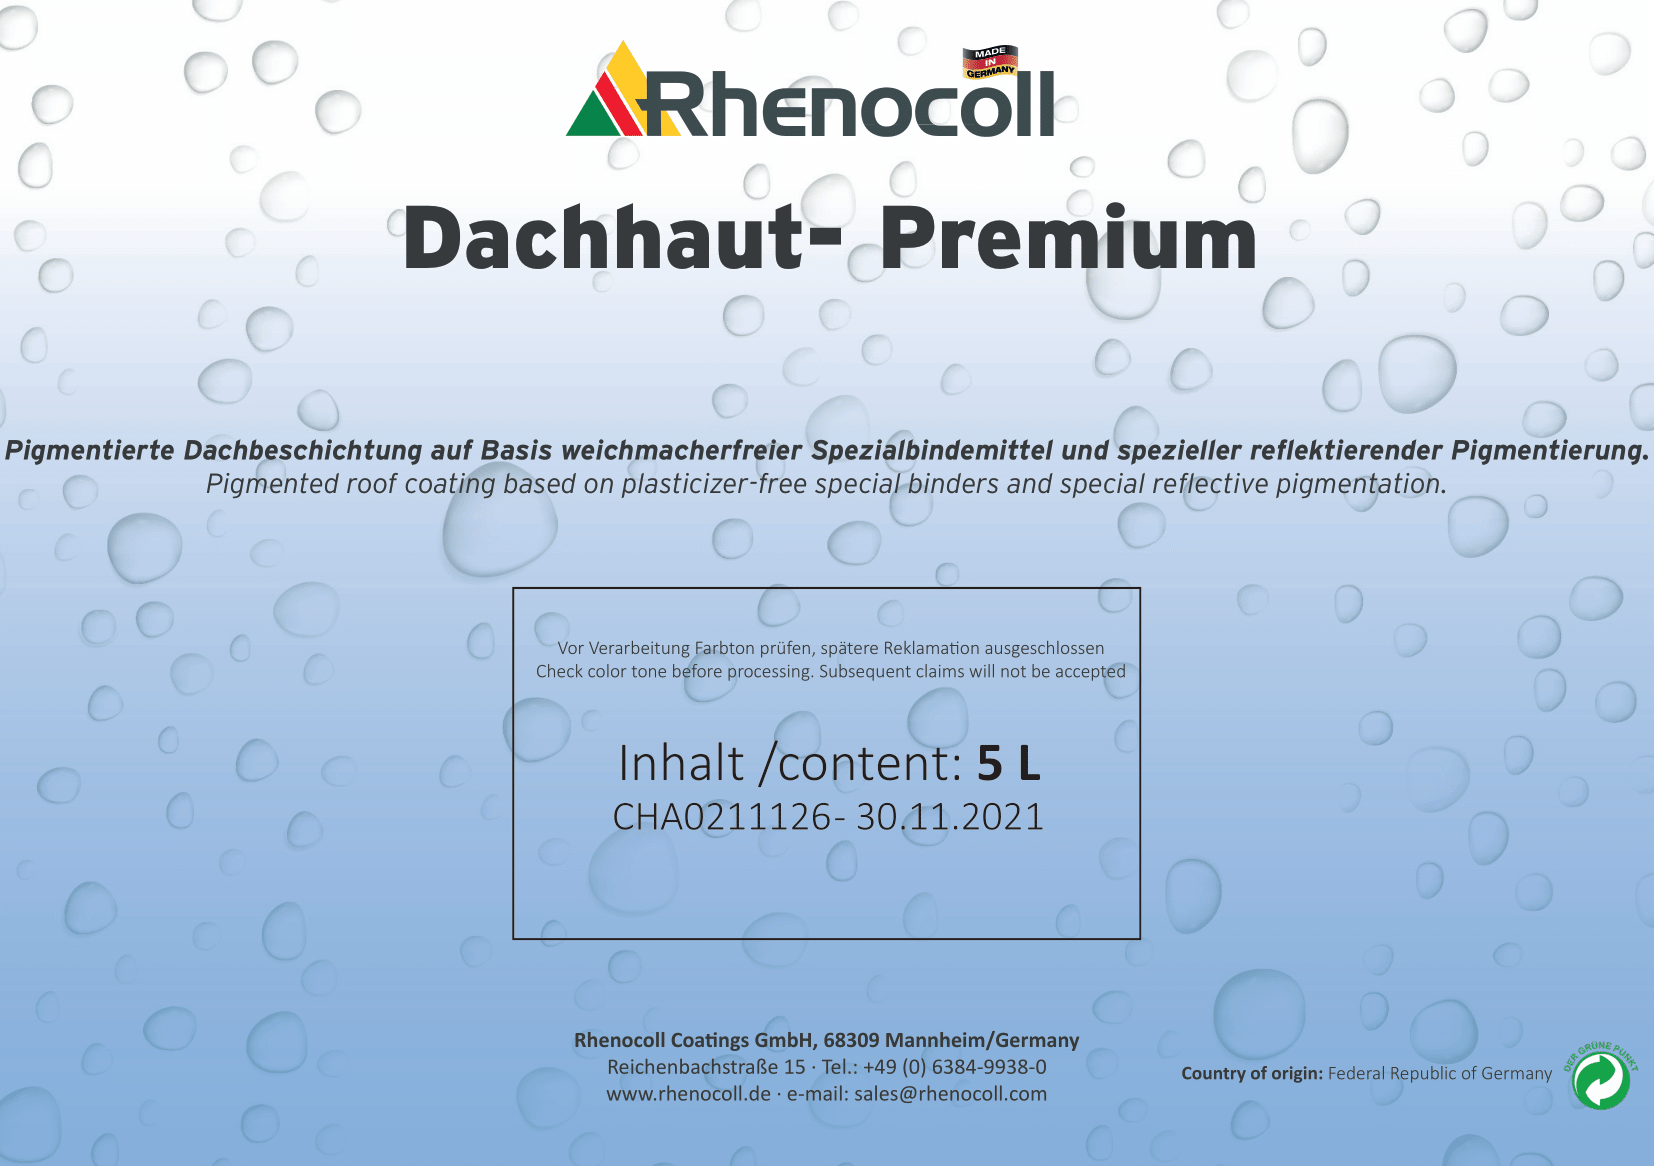 Rhenocoll Dachhaut- Premium